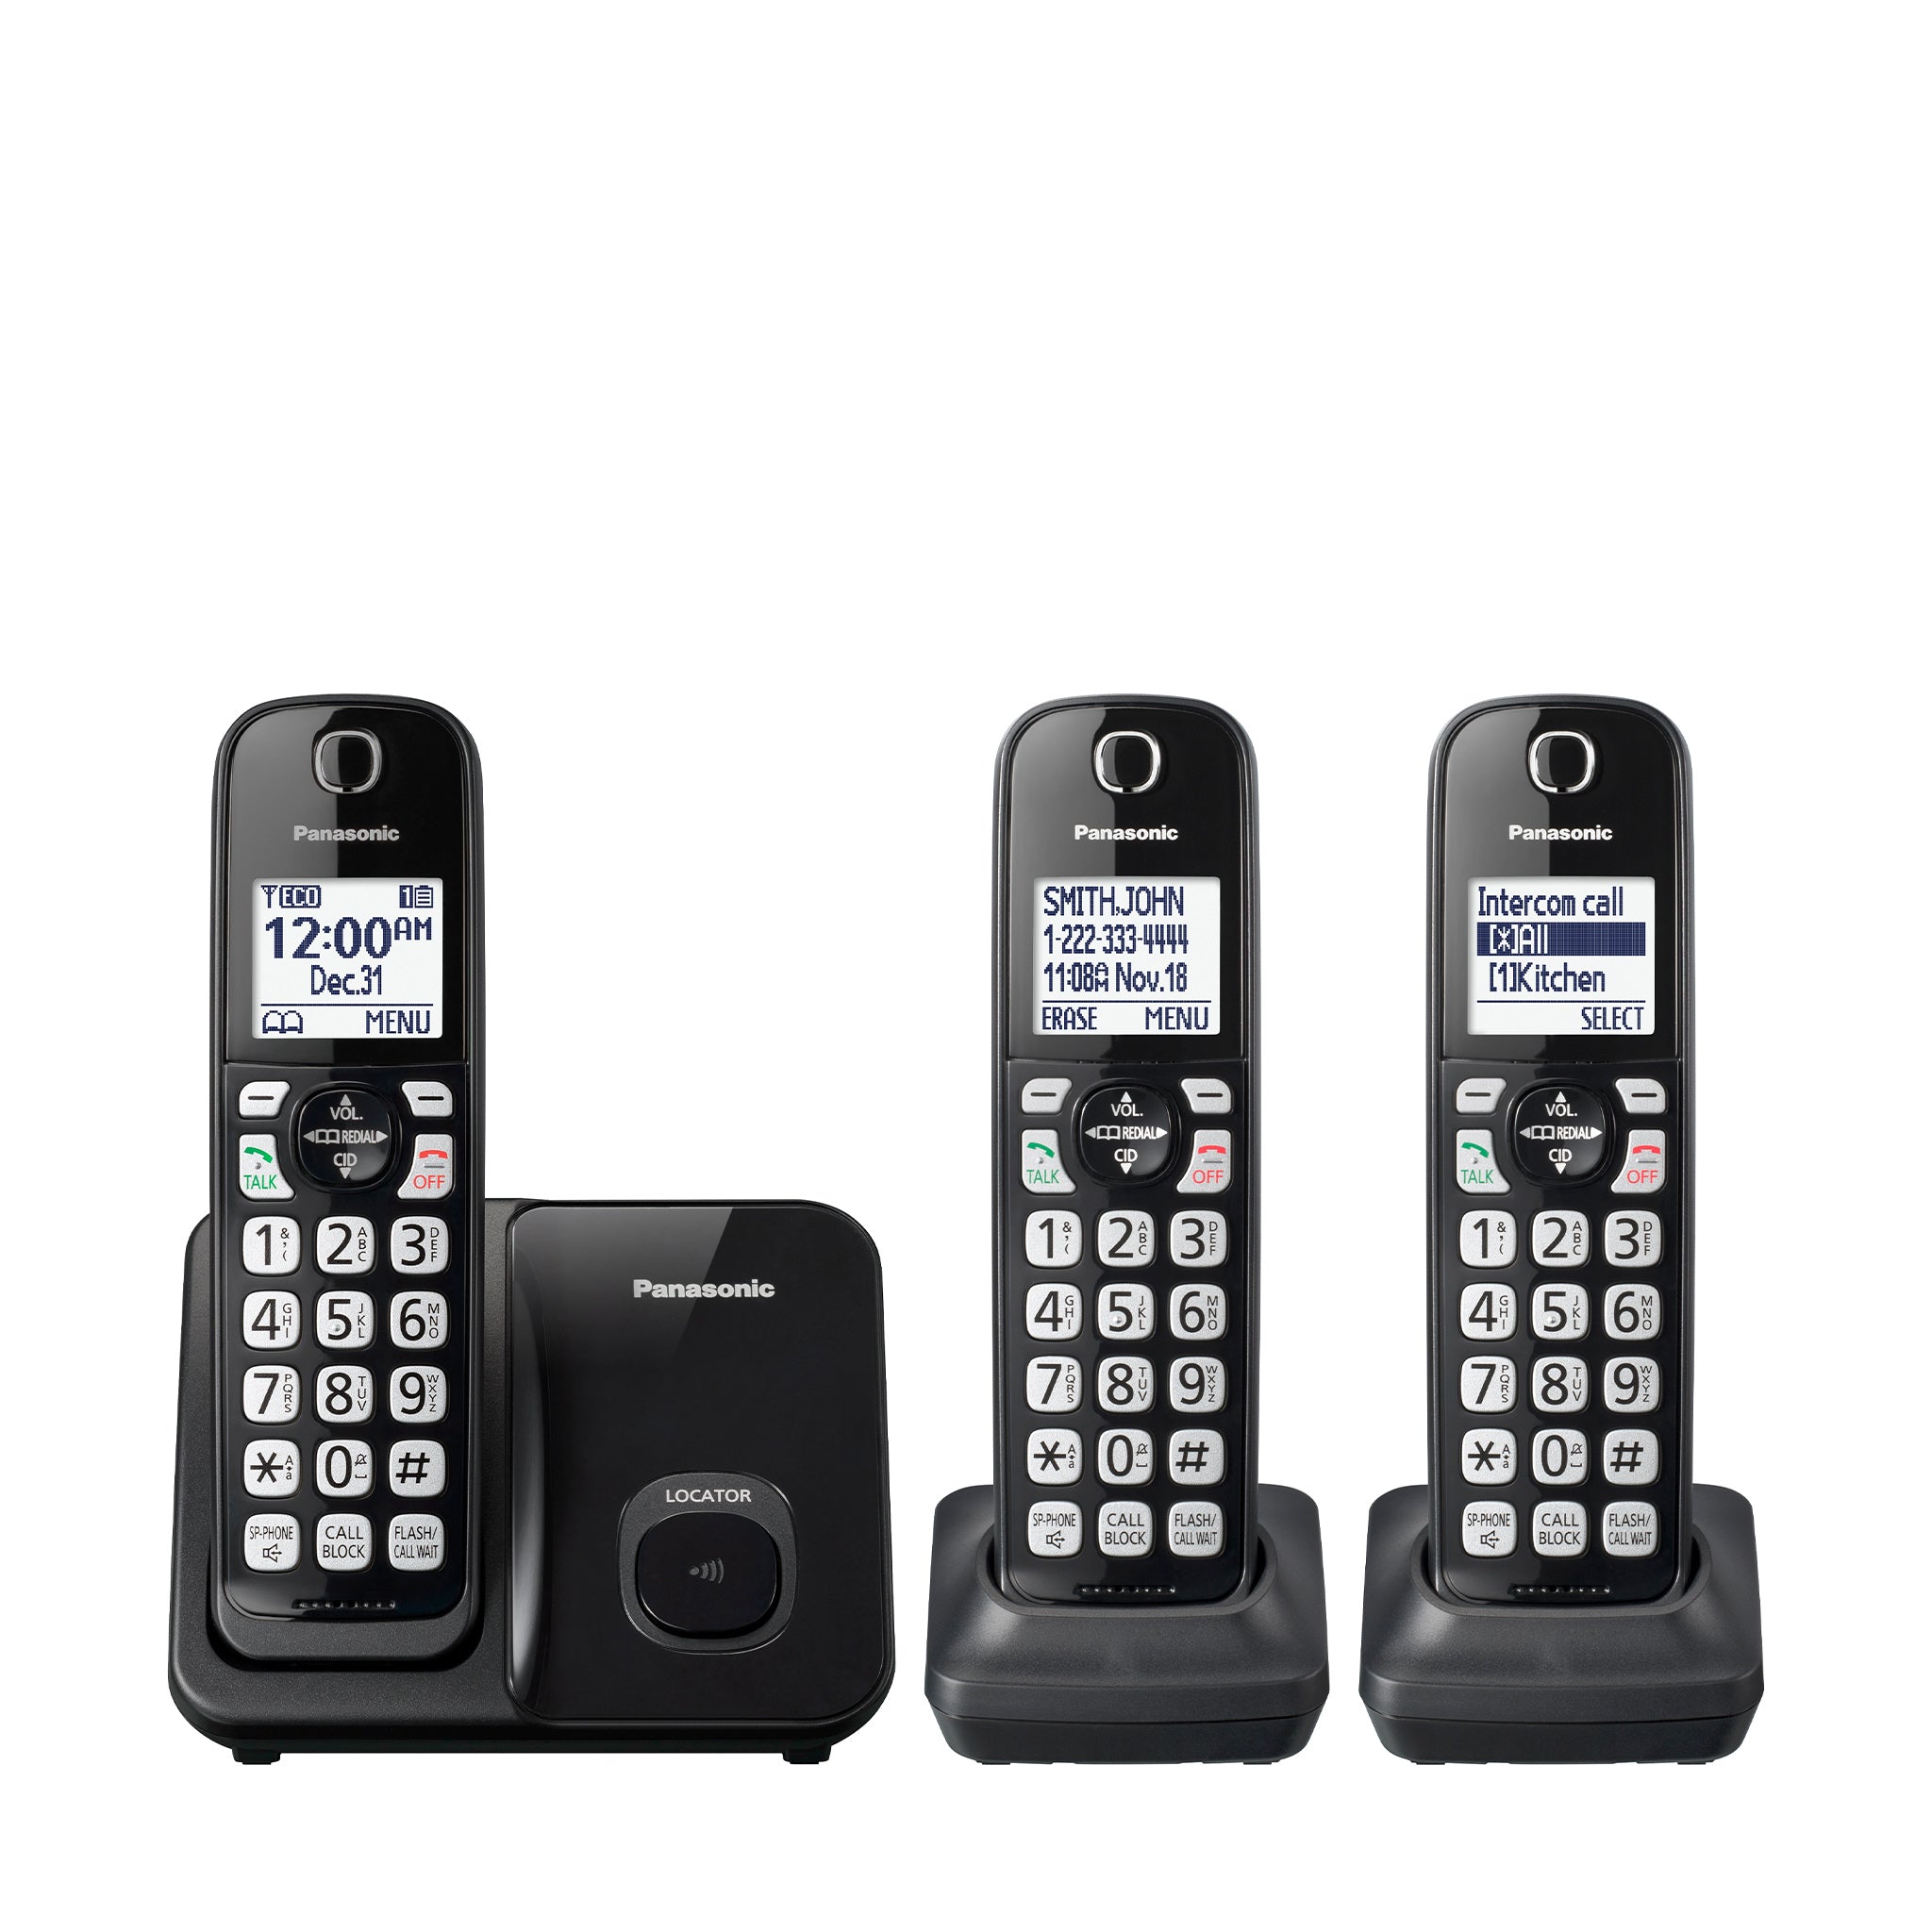 Téléphone sans fil - Série KX-TGD51x